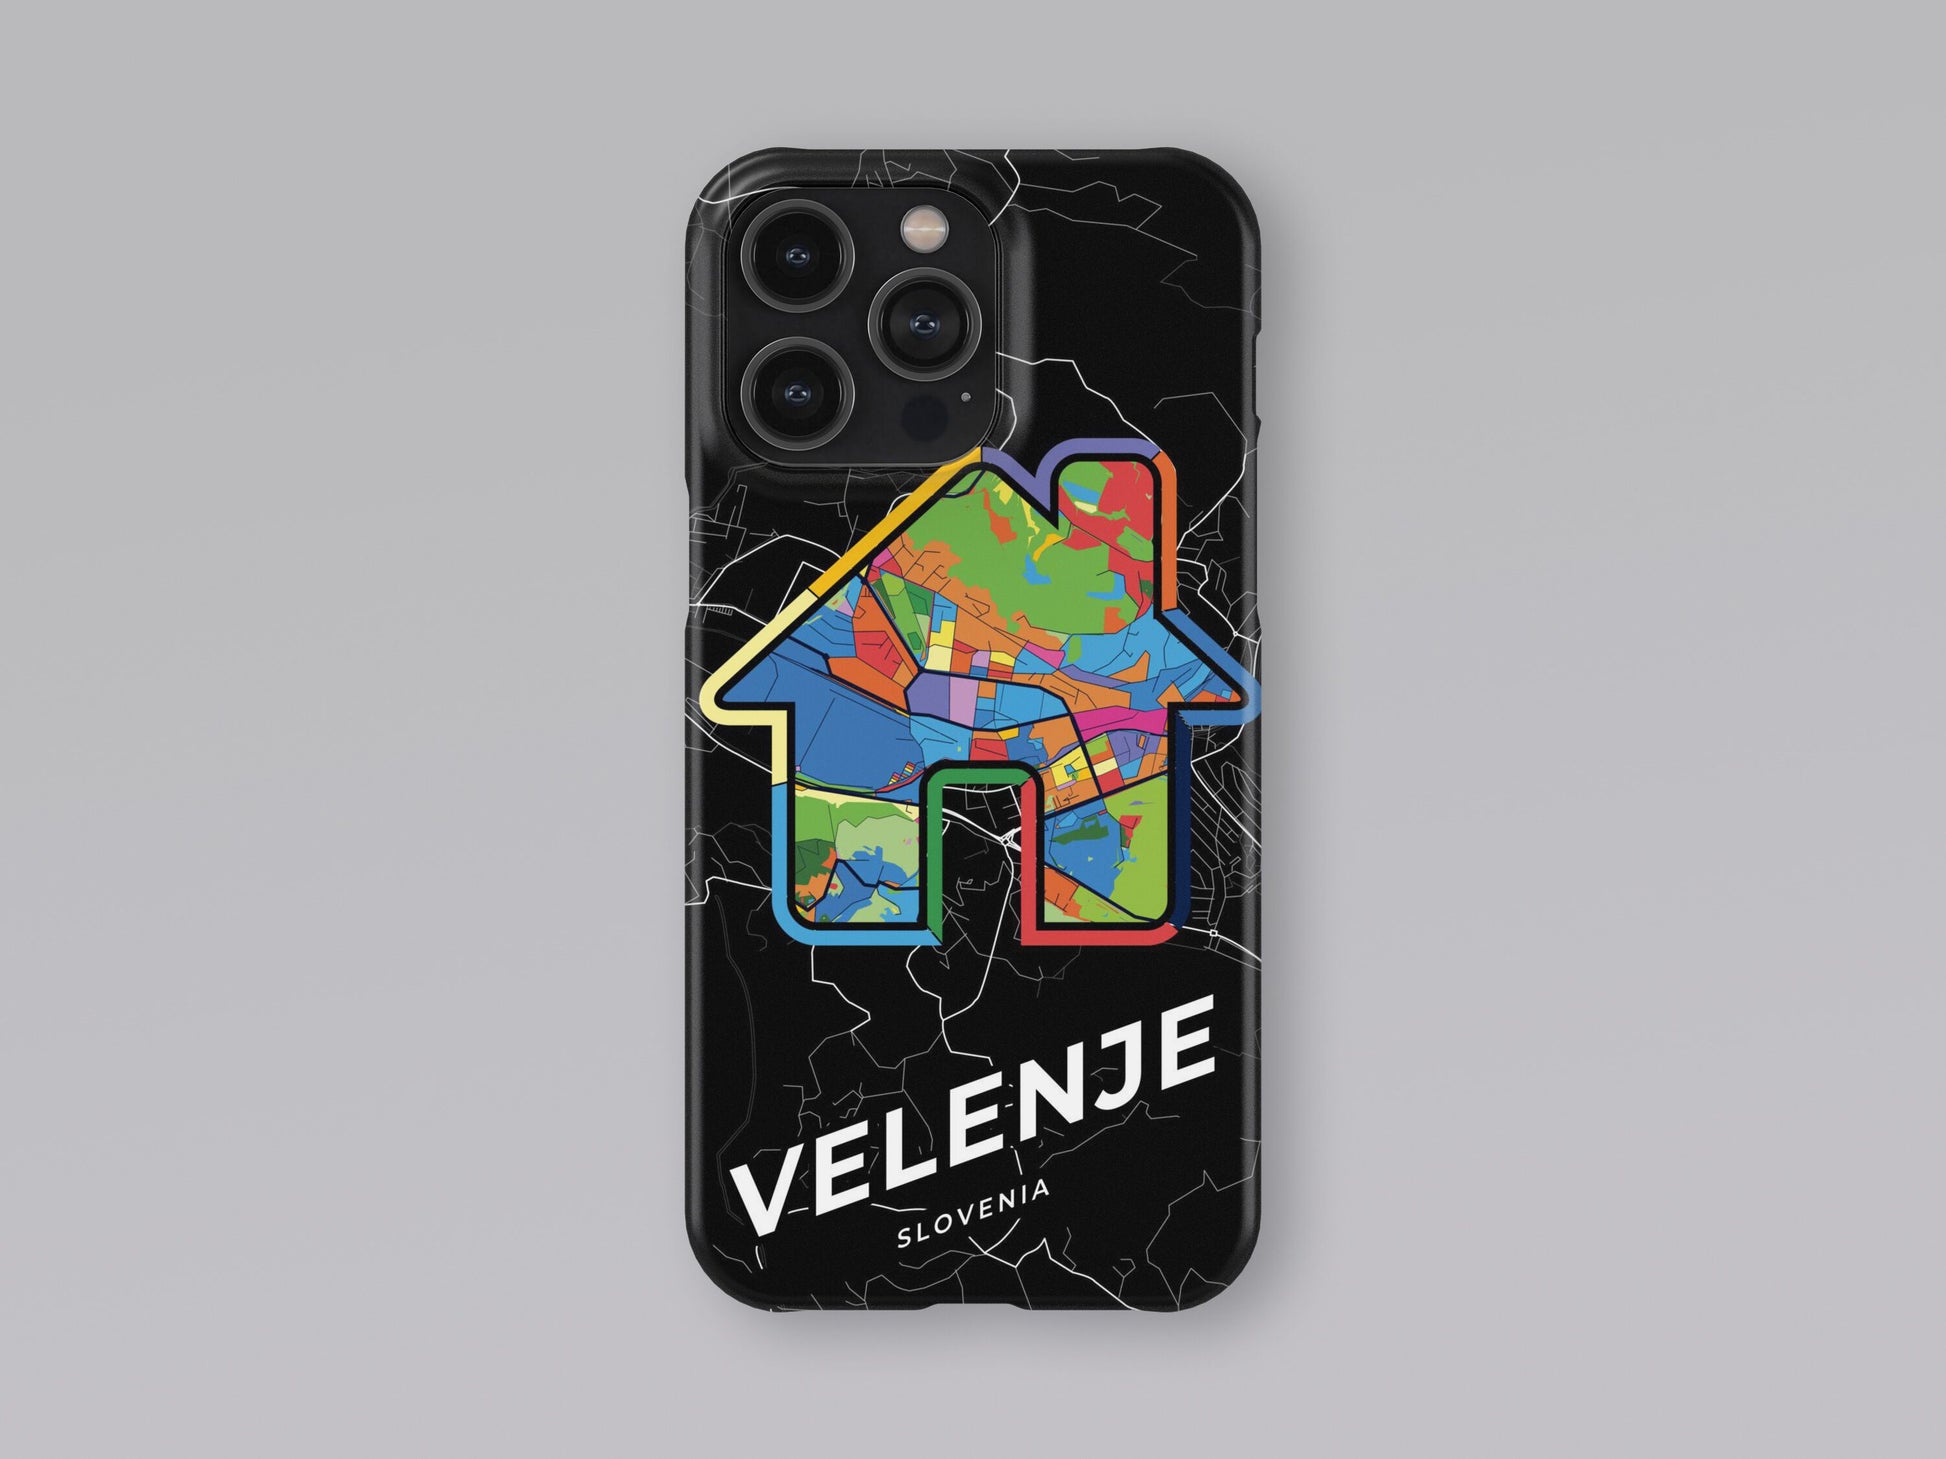 Velenje Slovenia slim phone case with colorful icon 3